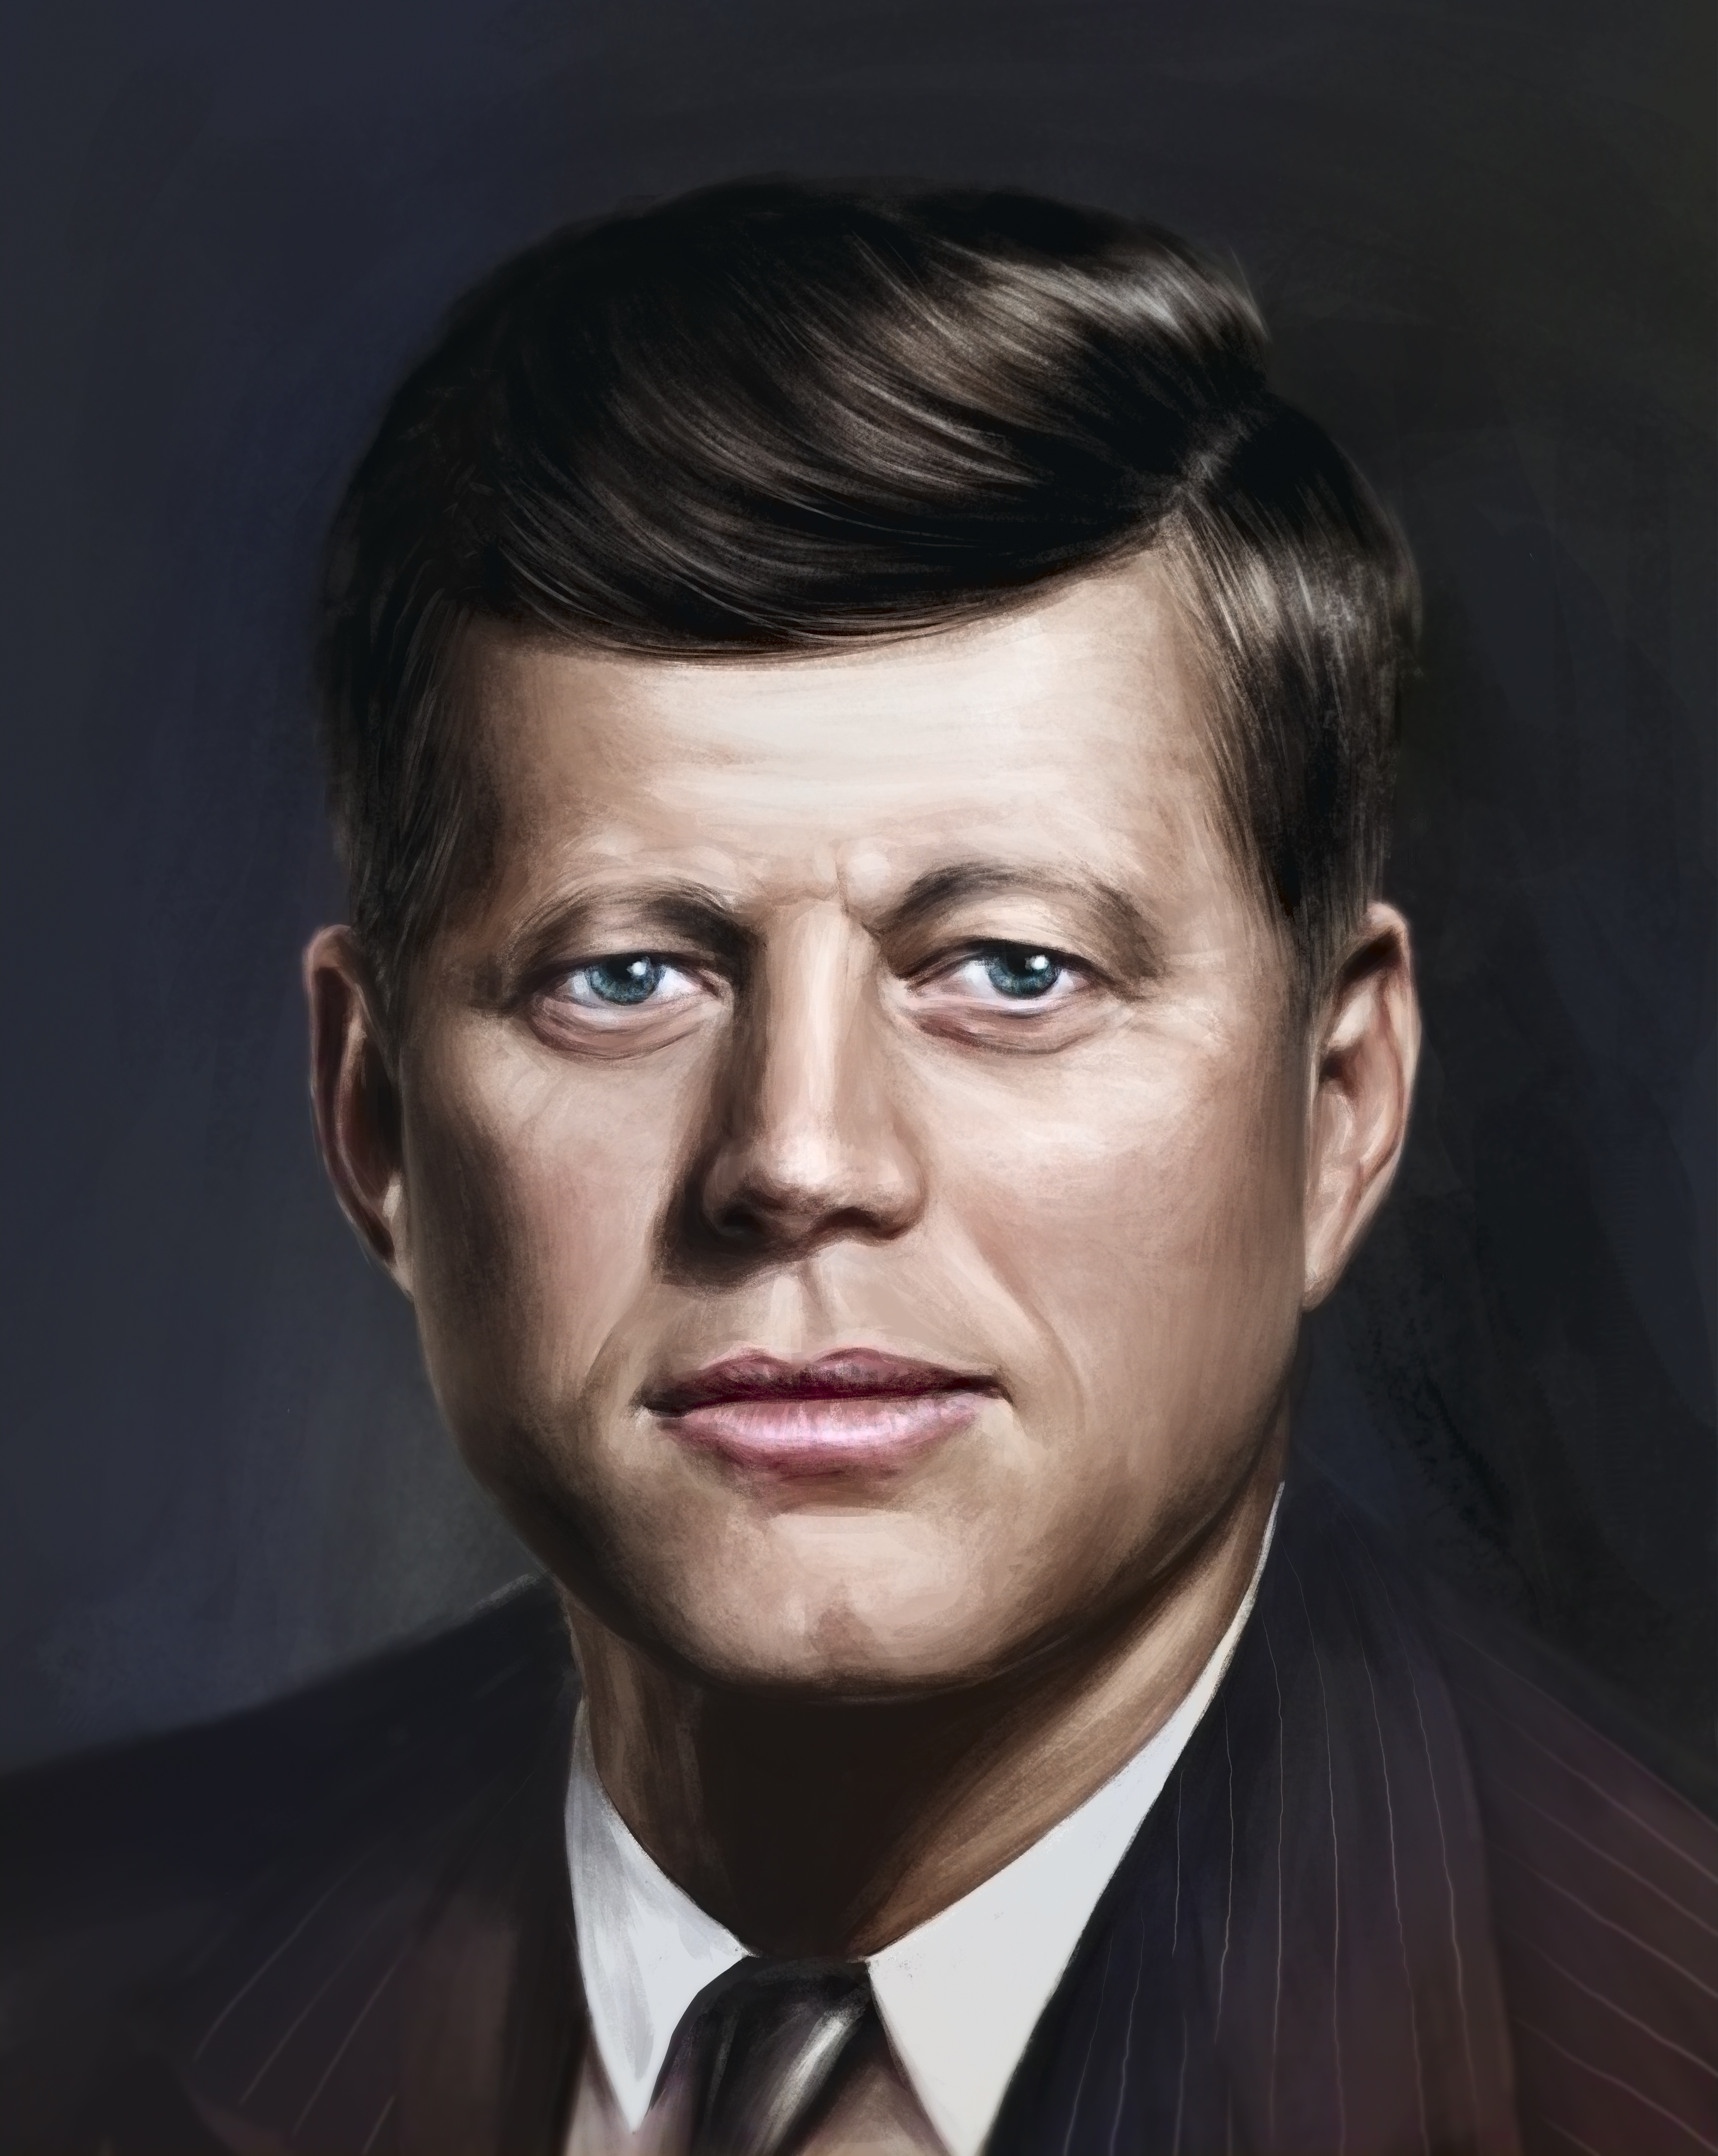 J. F. Kennedy - reprodukce kresby, kolorvaná - NA OBJEDNÁVKU DO 5 DNŮ